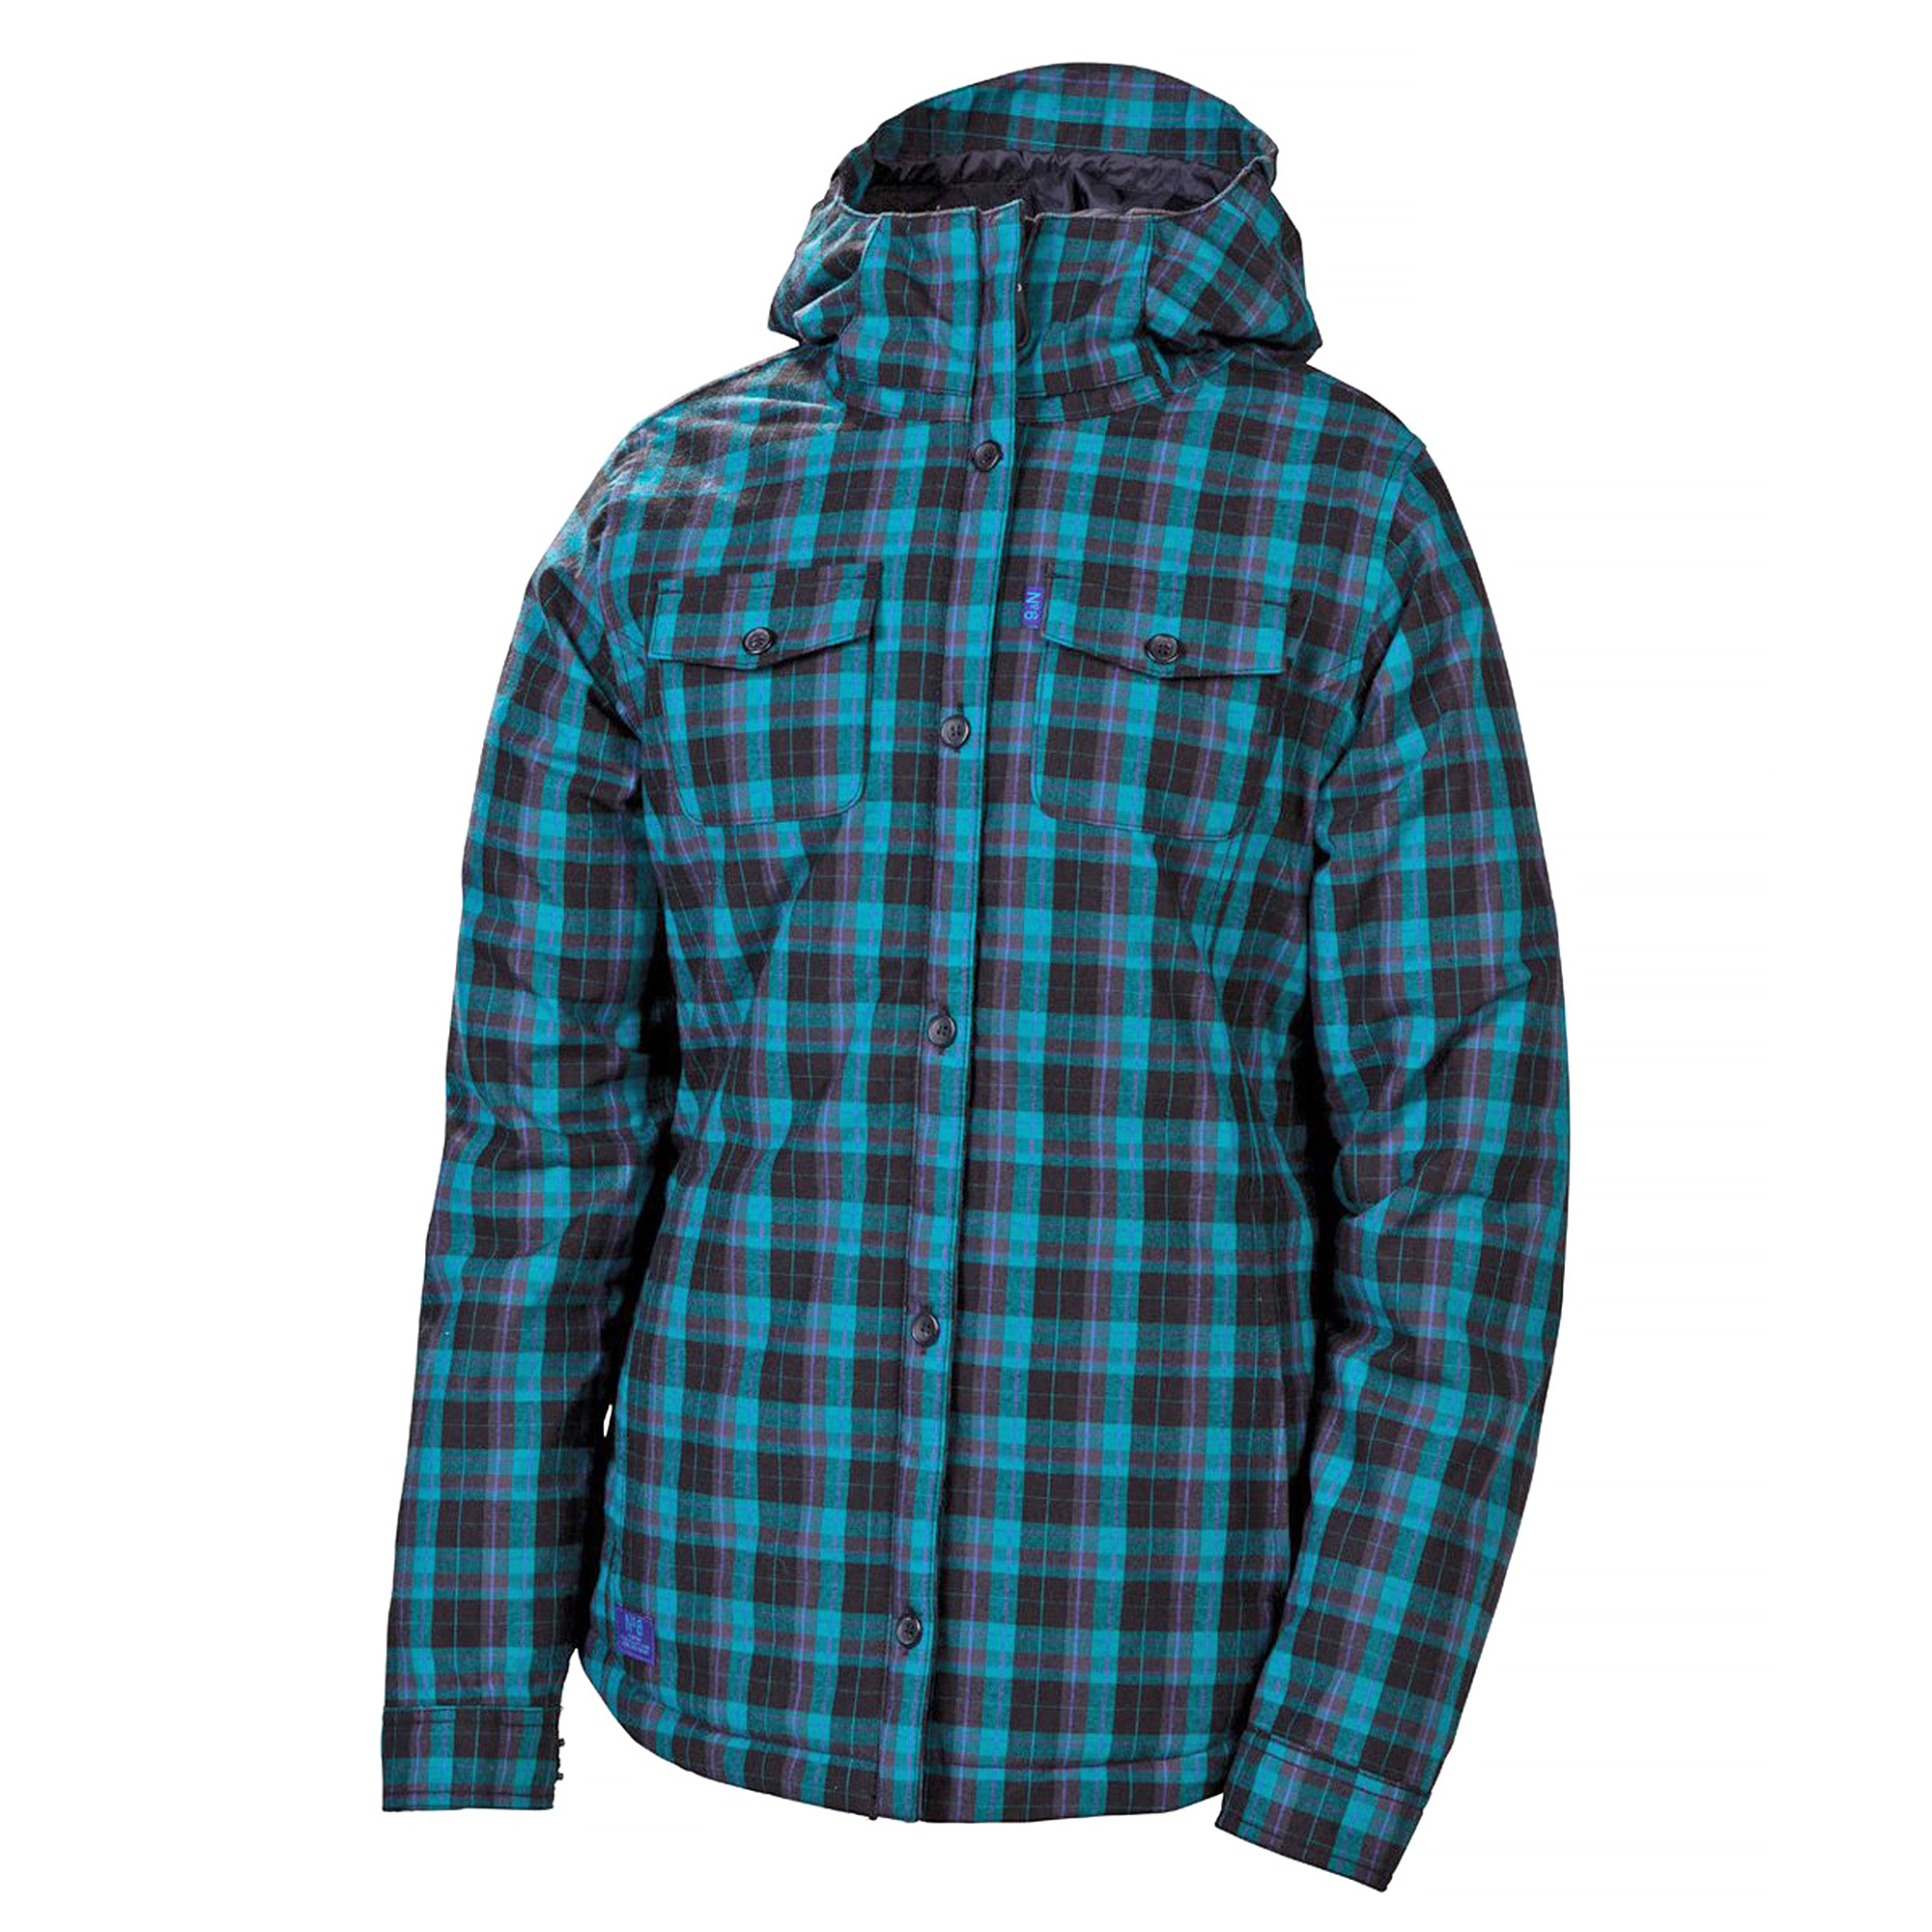 Куртка для высокой активности 686 Wms Reserved Tonic Insulated Jacket Teal Flannel